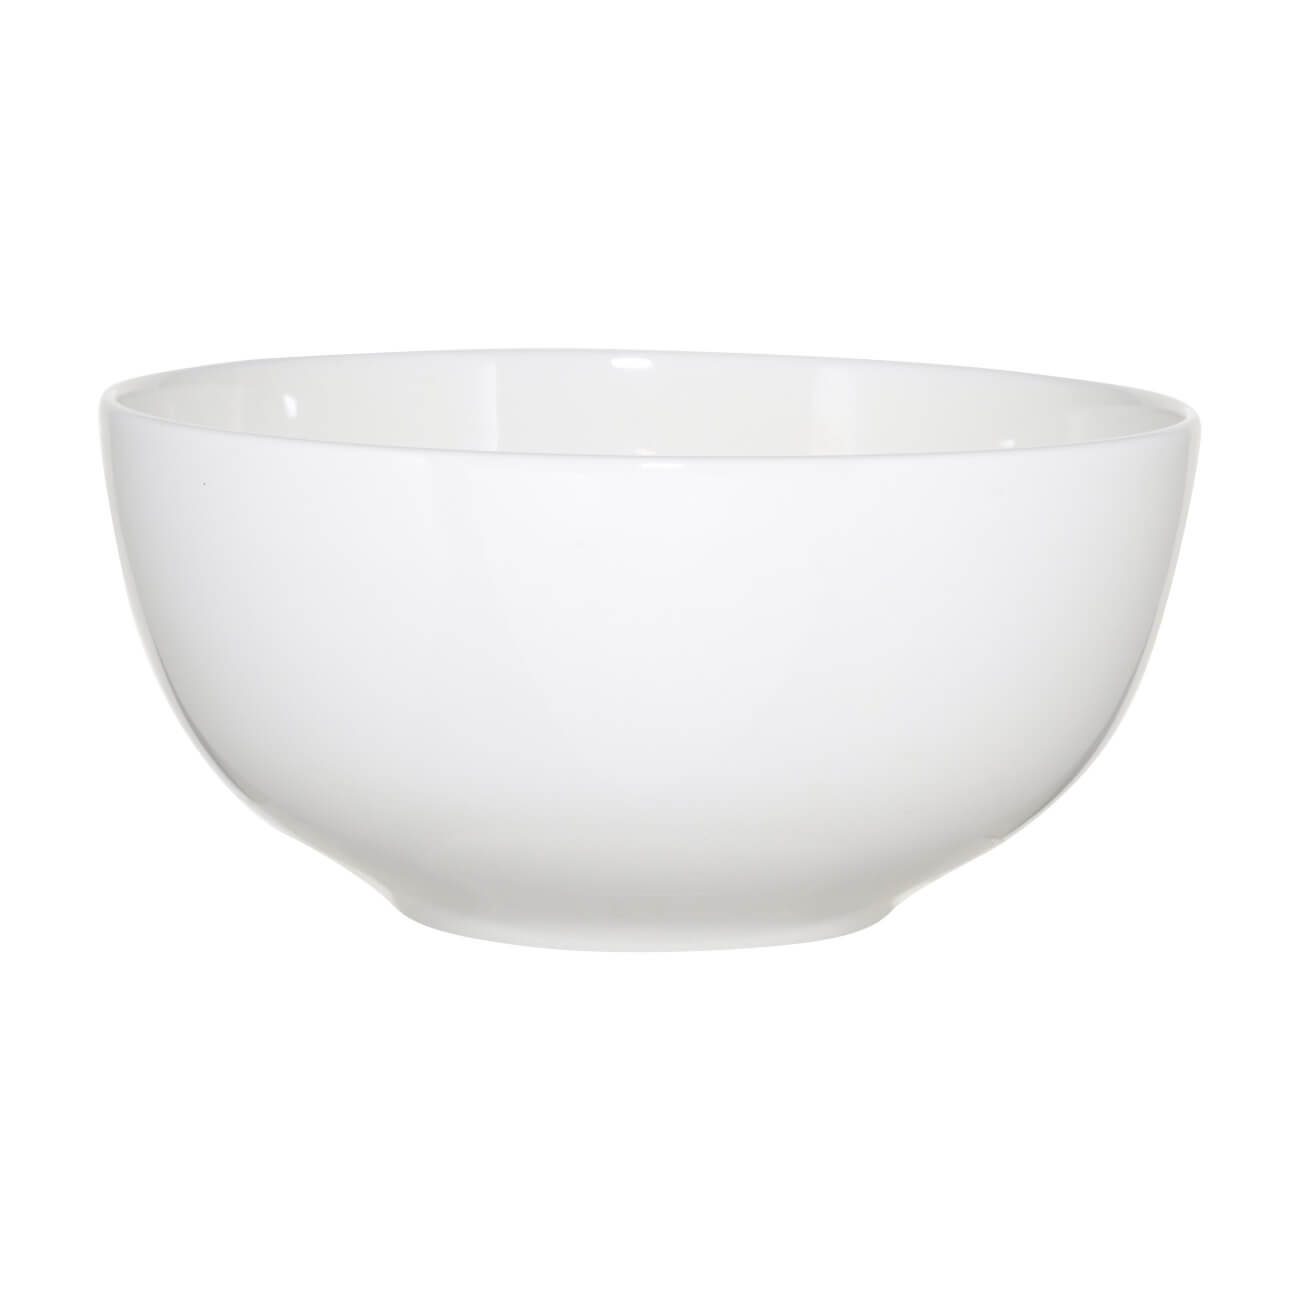 Салатник, 18х9 см, 1,2 л, фарфор F, белый, Ideal white тарелка обеденная 26 см фарфор f белая ideal white